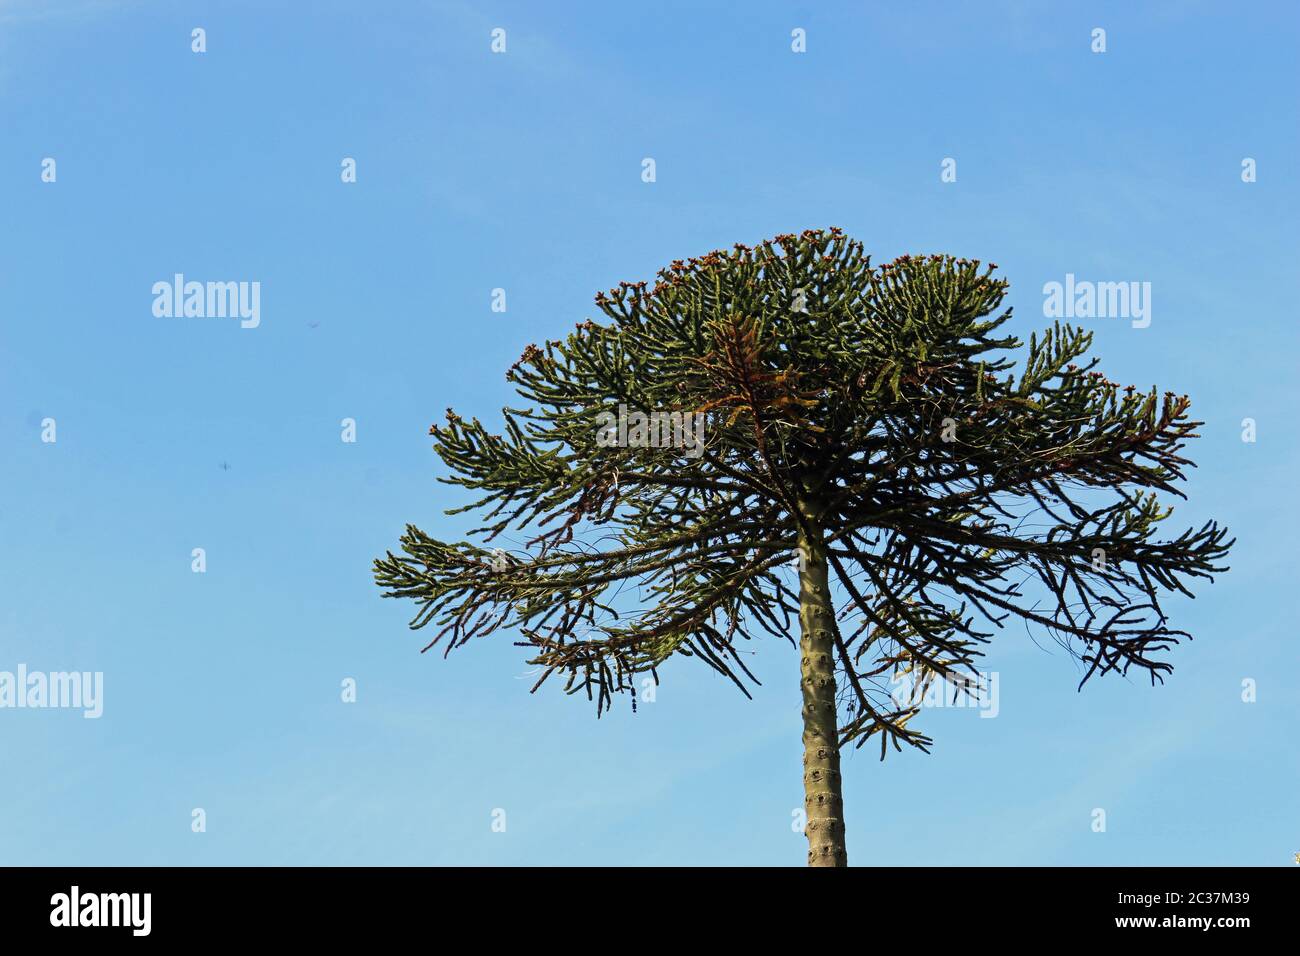 Araucaria o Pino chileno, Araucaria araucana, ramas de árboles con un fondo de cielo azul, con un buen espacio de copia. Foto de stock